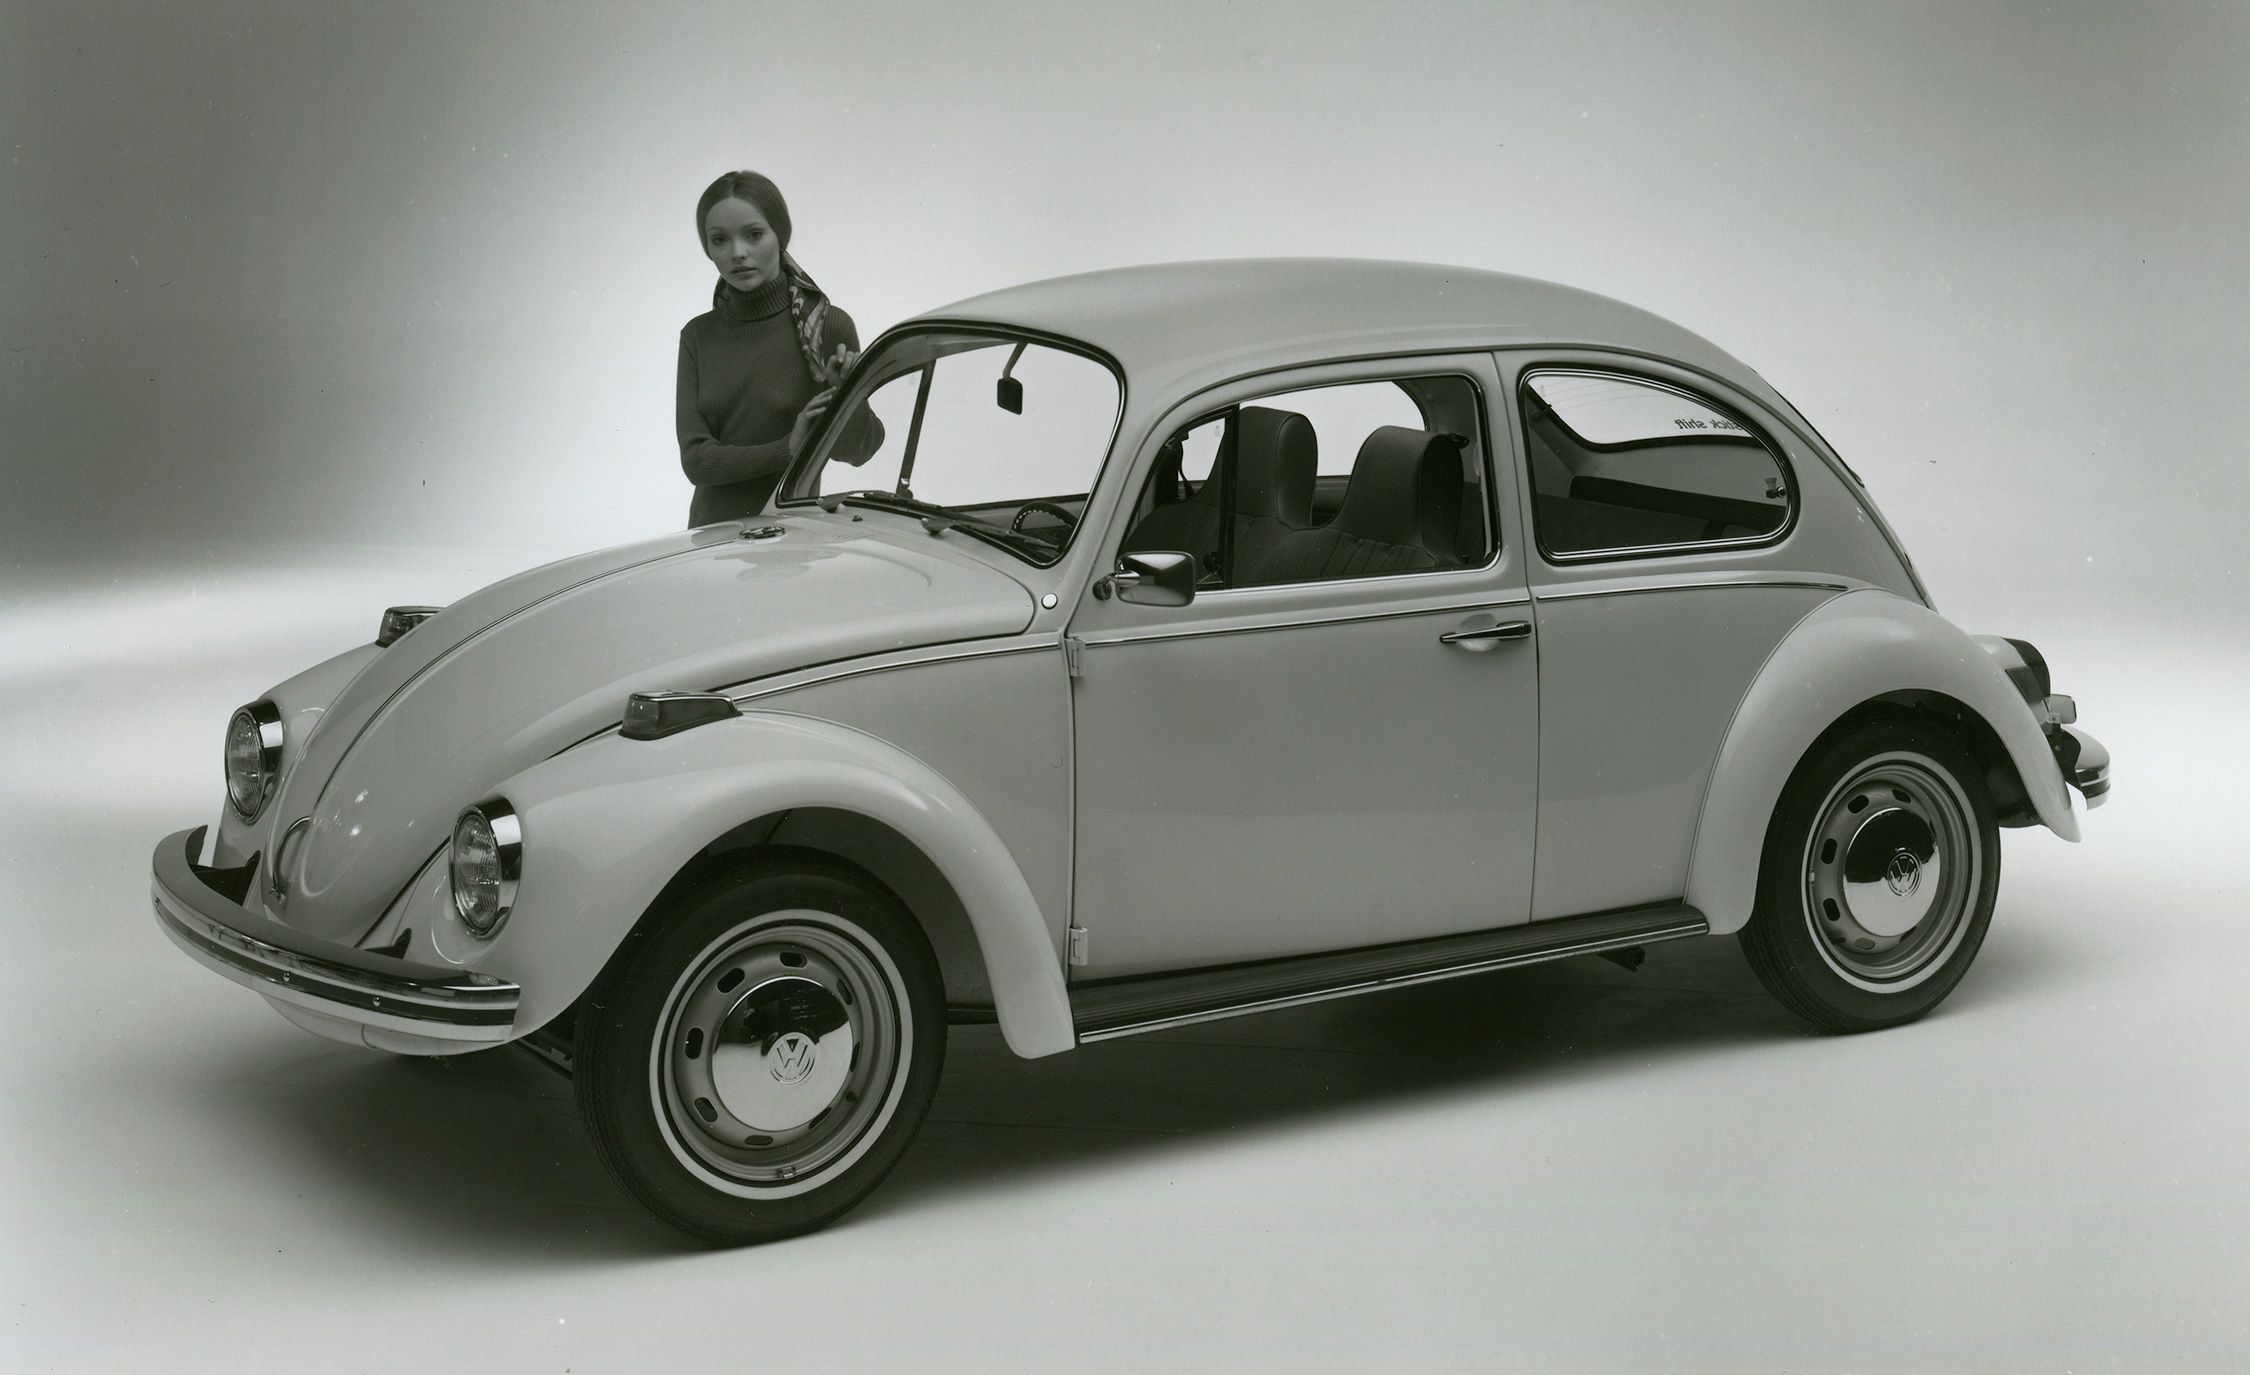 1966 VW Beetle cross section24 X 36 Inch 